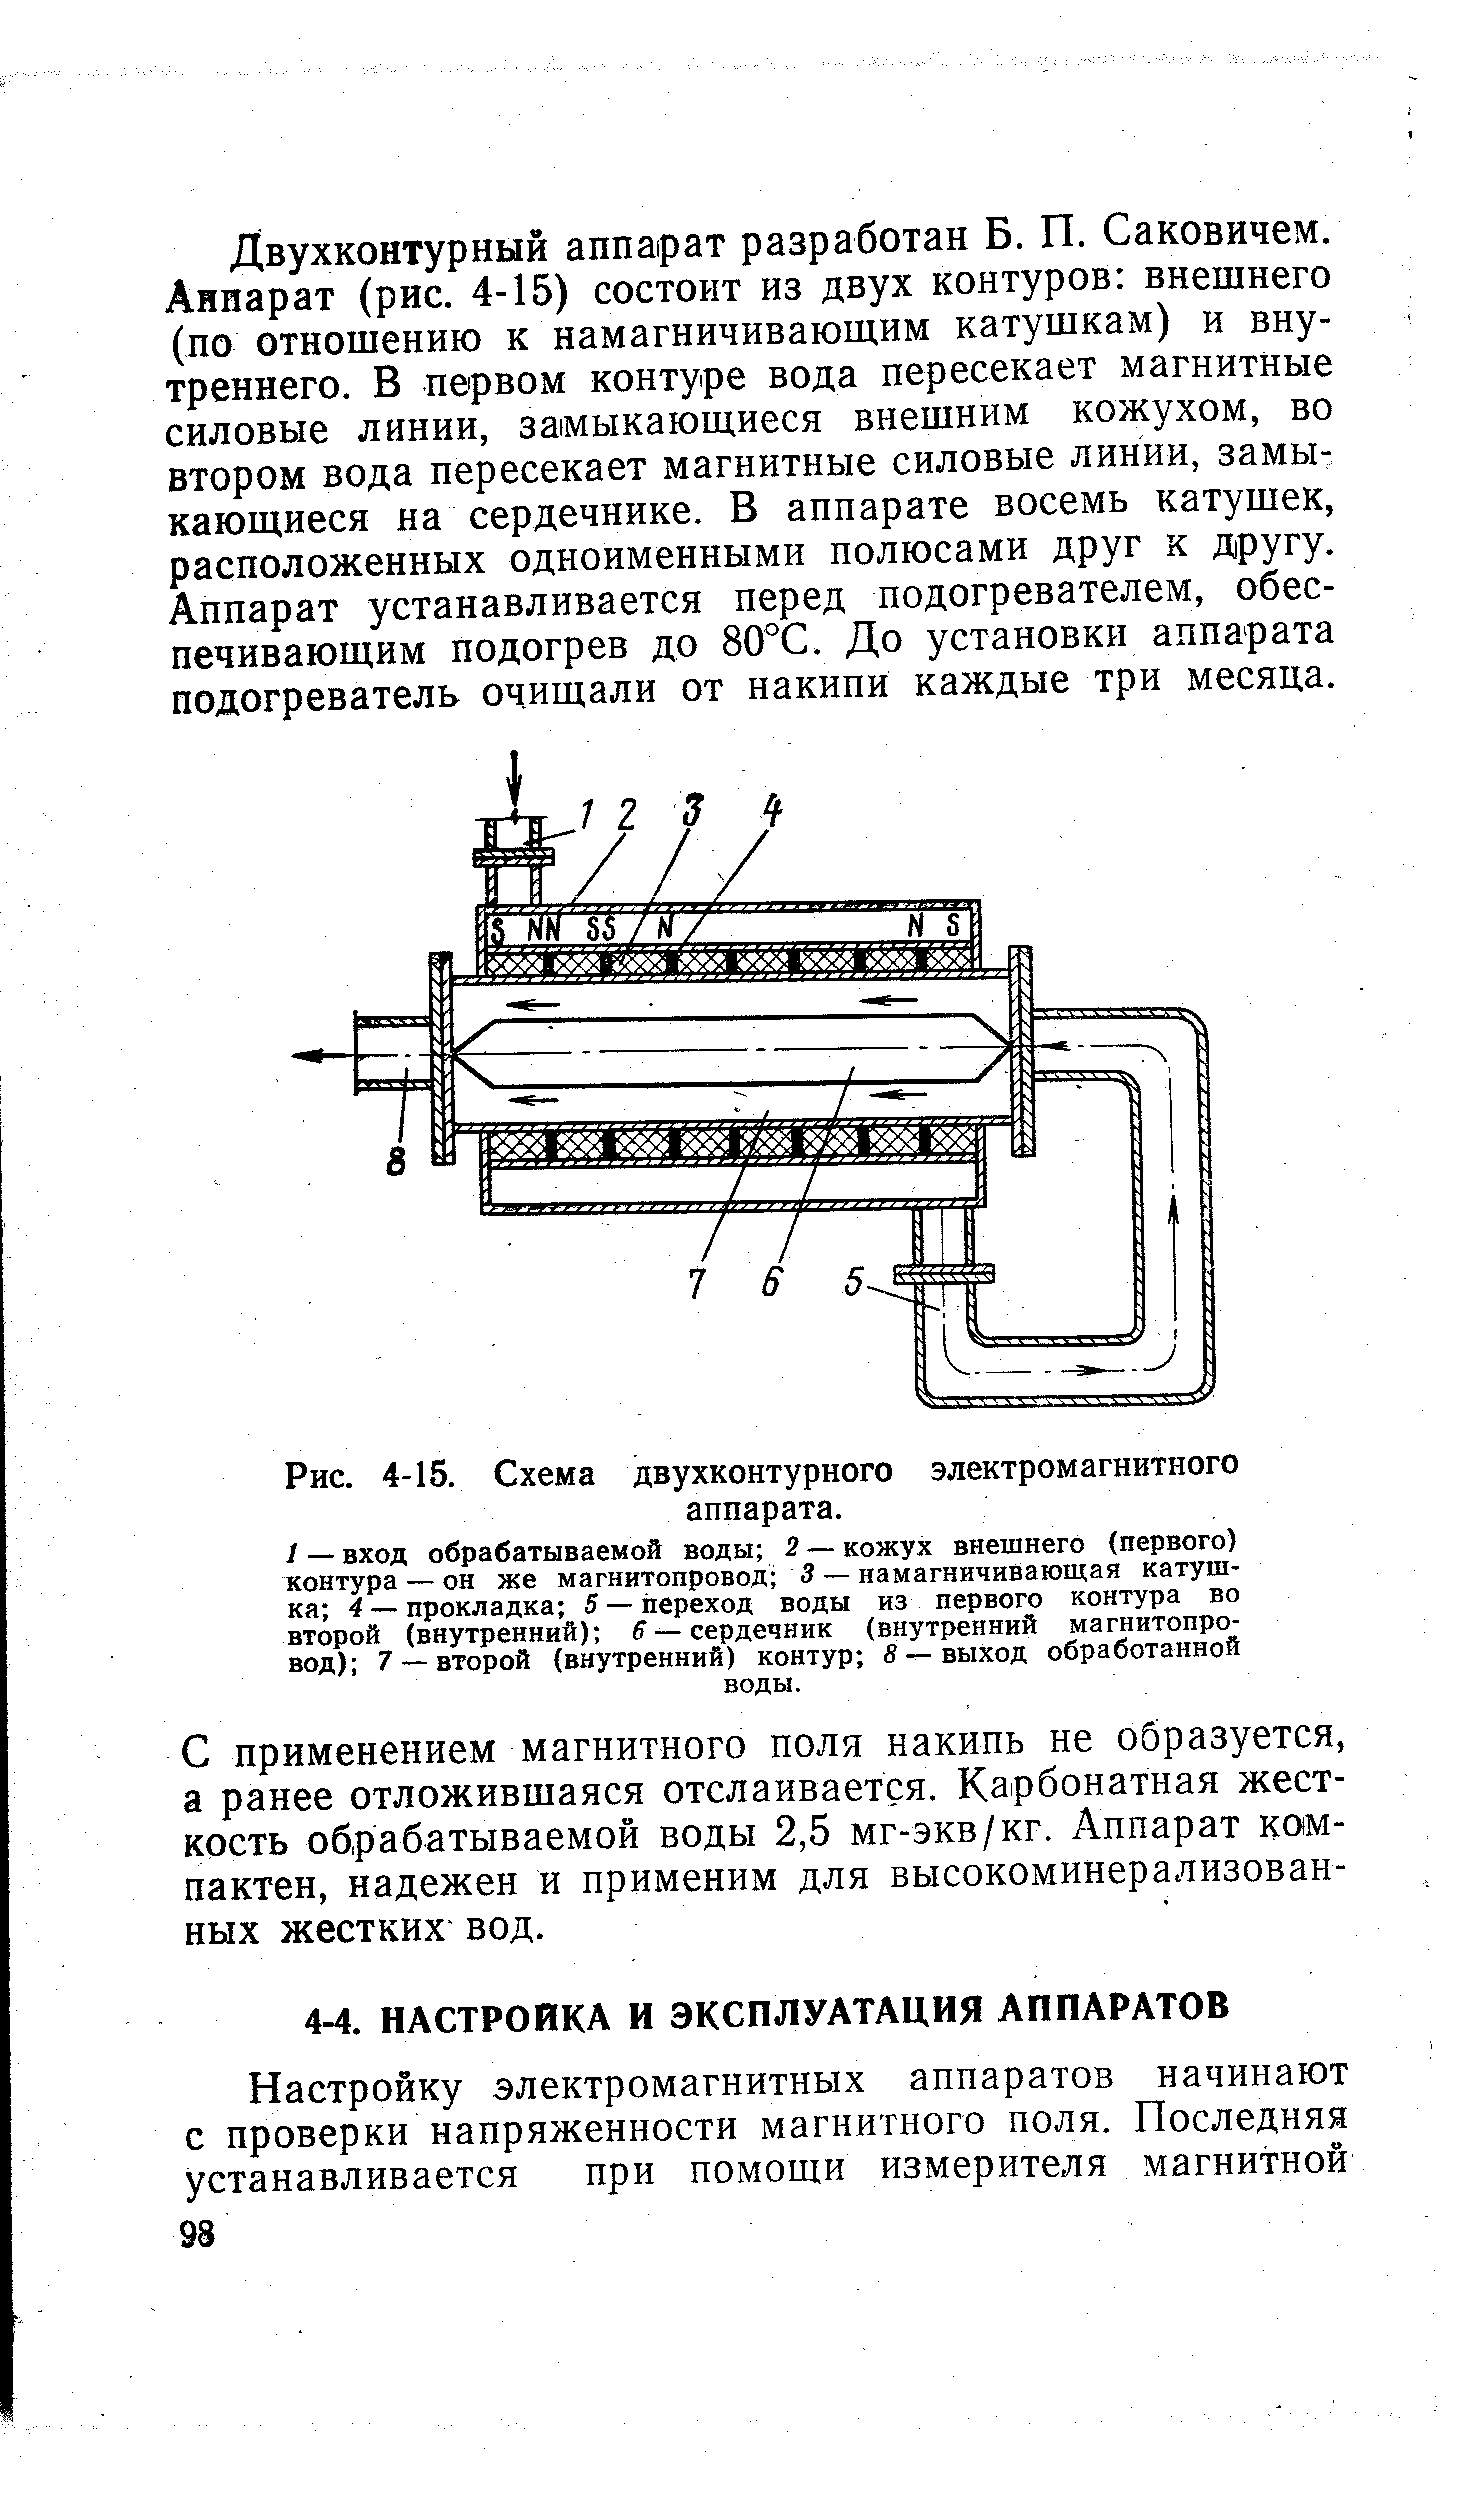 Рис. 4-15. Схема двухконтурного электромагнитного аппарата.
